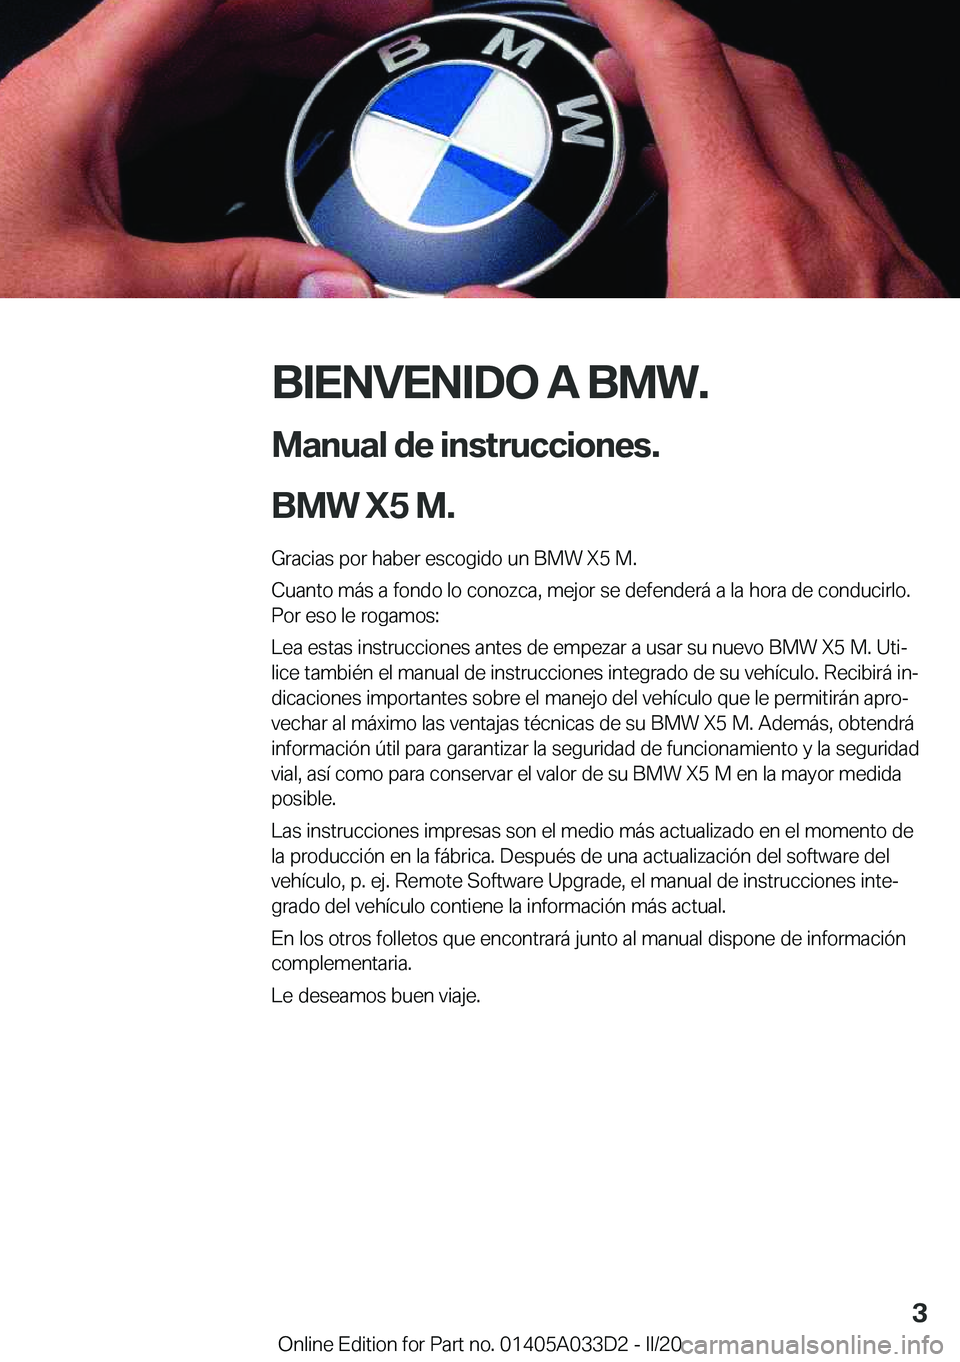 BMW X5 M 2020  Manuales de Empleo (in Spanish) �B�I�E�N�V�E�N�I�D�O��A��B�M�W�.
�M�a�n�u�a�l��d�e��i�n�s�t�r�u�c�c�i�o�n�e�s�.
�B�M�W��X�5��M�. �G�r�a�c�i�a�s��p�o�r��h�a�b�e�r��e�s�c�o�g�i�d�o��u�n��B�M�W��X�5��M�.
�C�u�a�n�t�o��m�